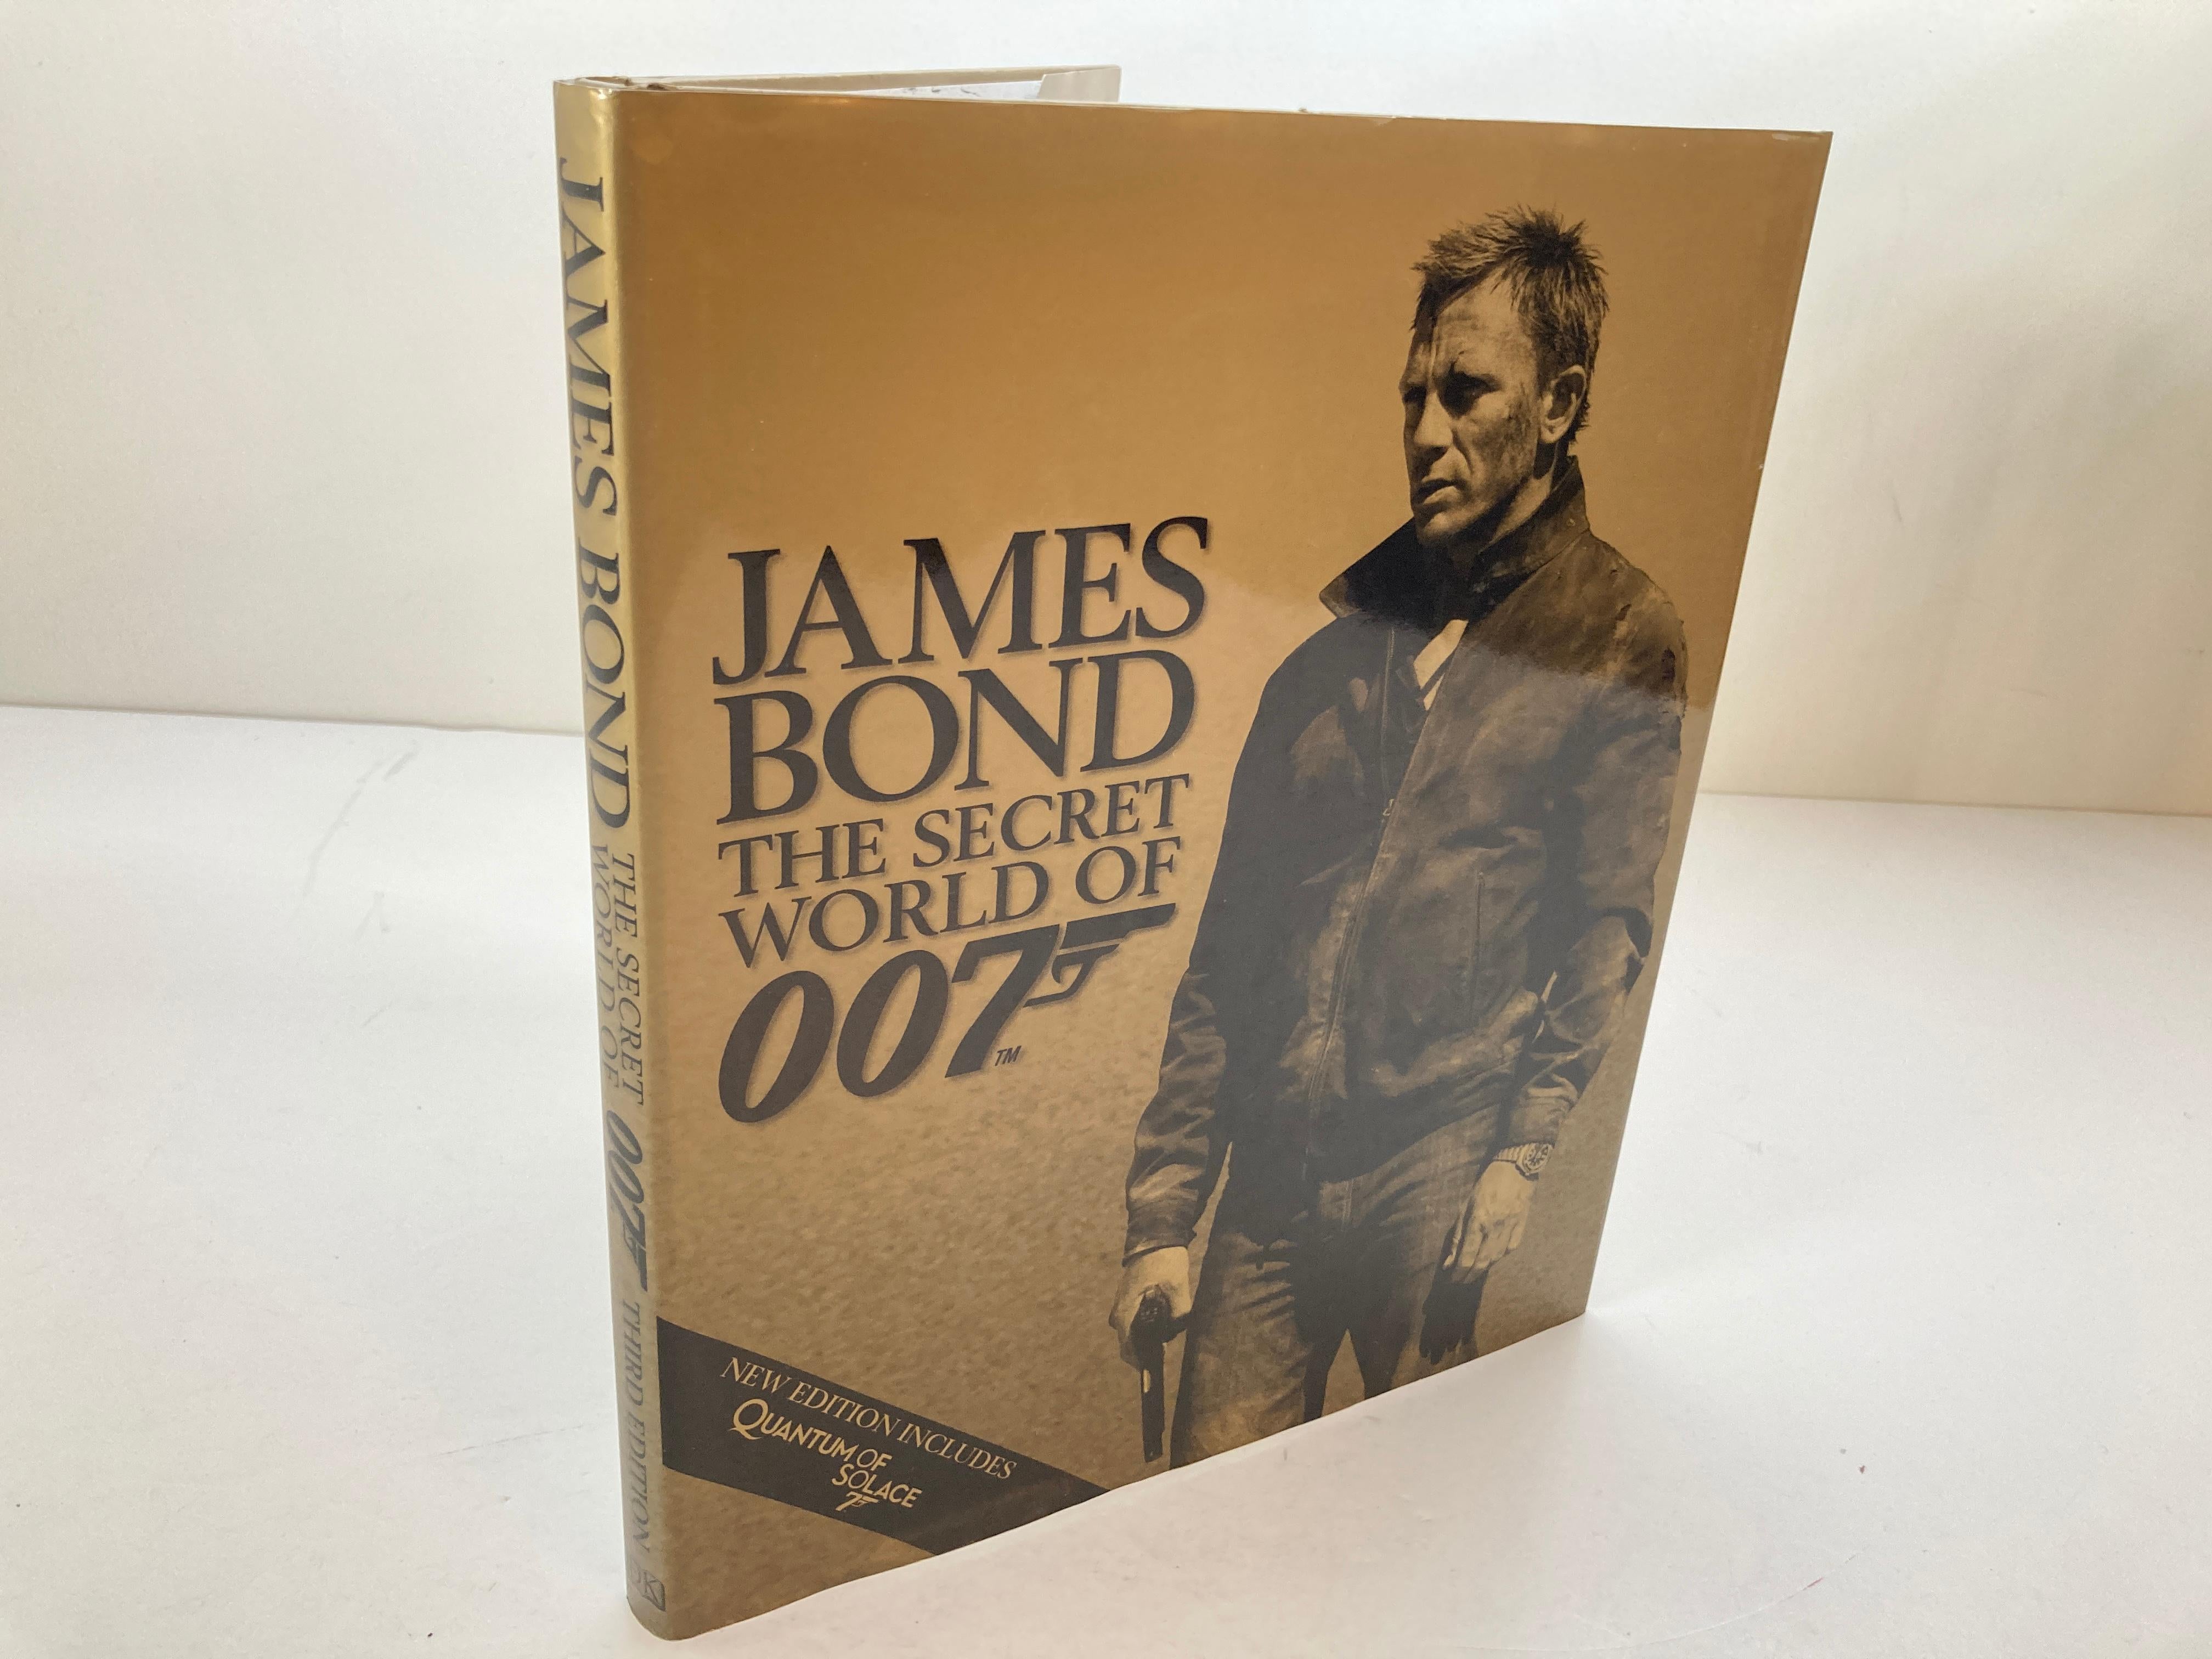 James Bond The Secret World of 007 Hardcover Book 1